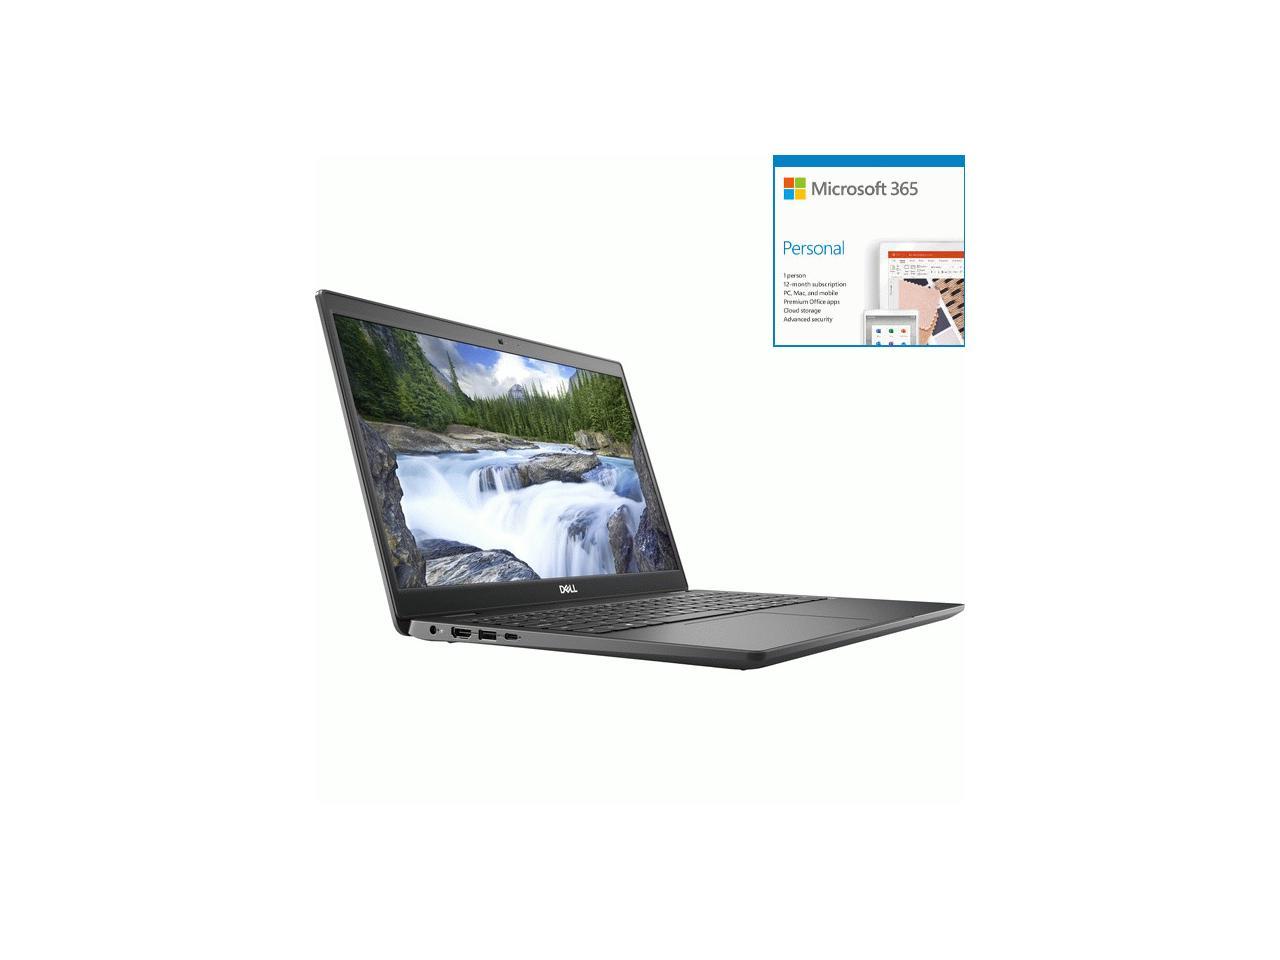 Dell Latitude 3000 3510 15.6" Notebook - HD - 1366 x 768 - I + Microsoft 365 Bundle